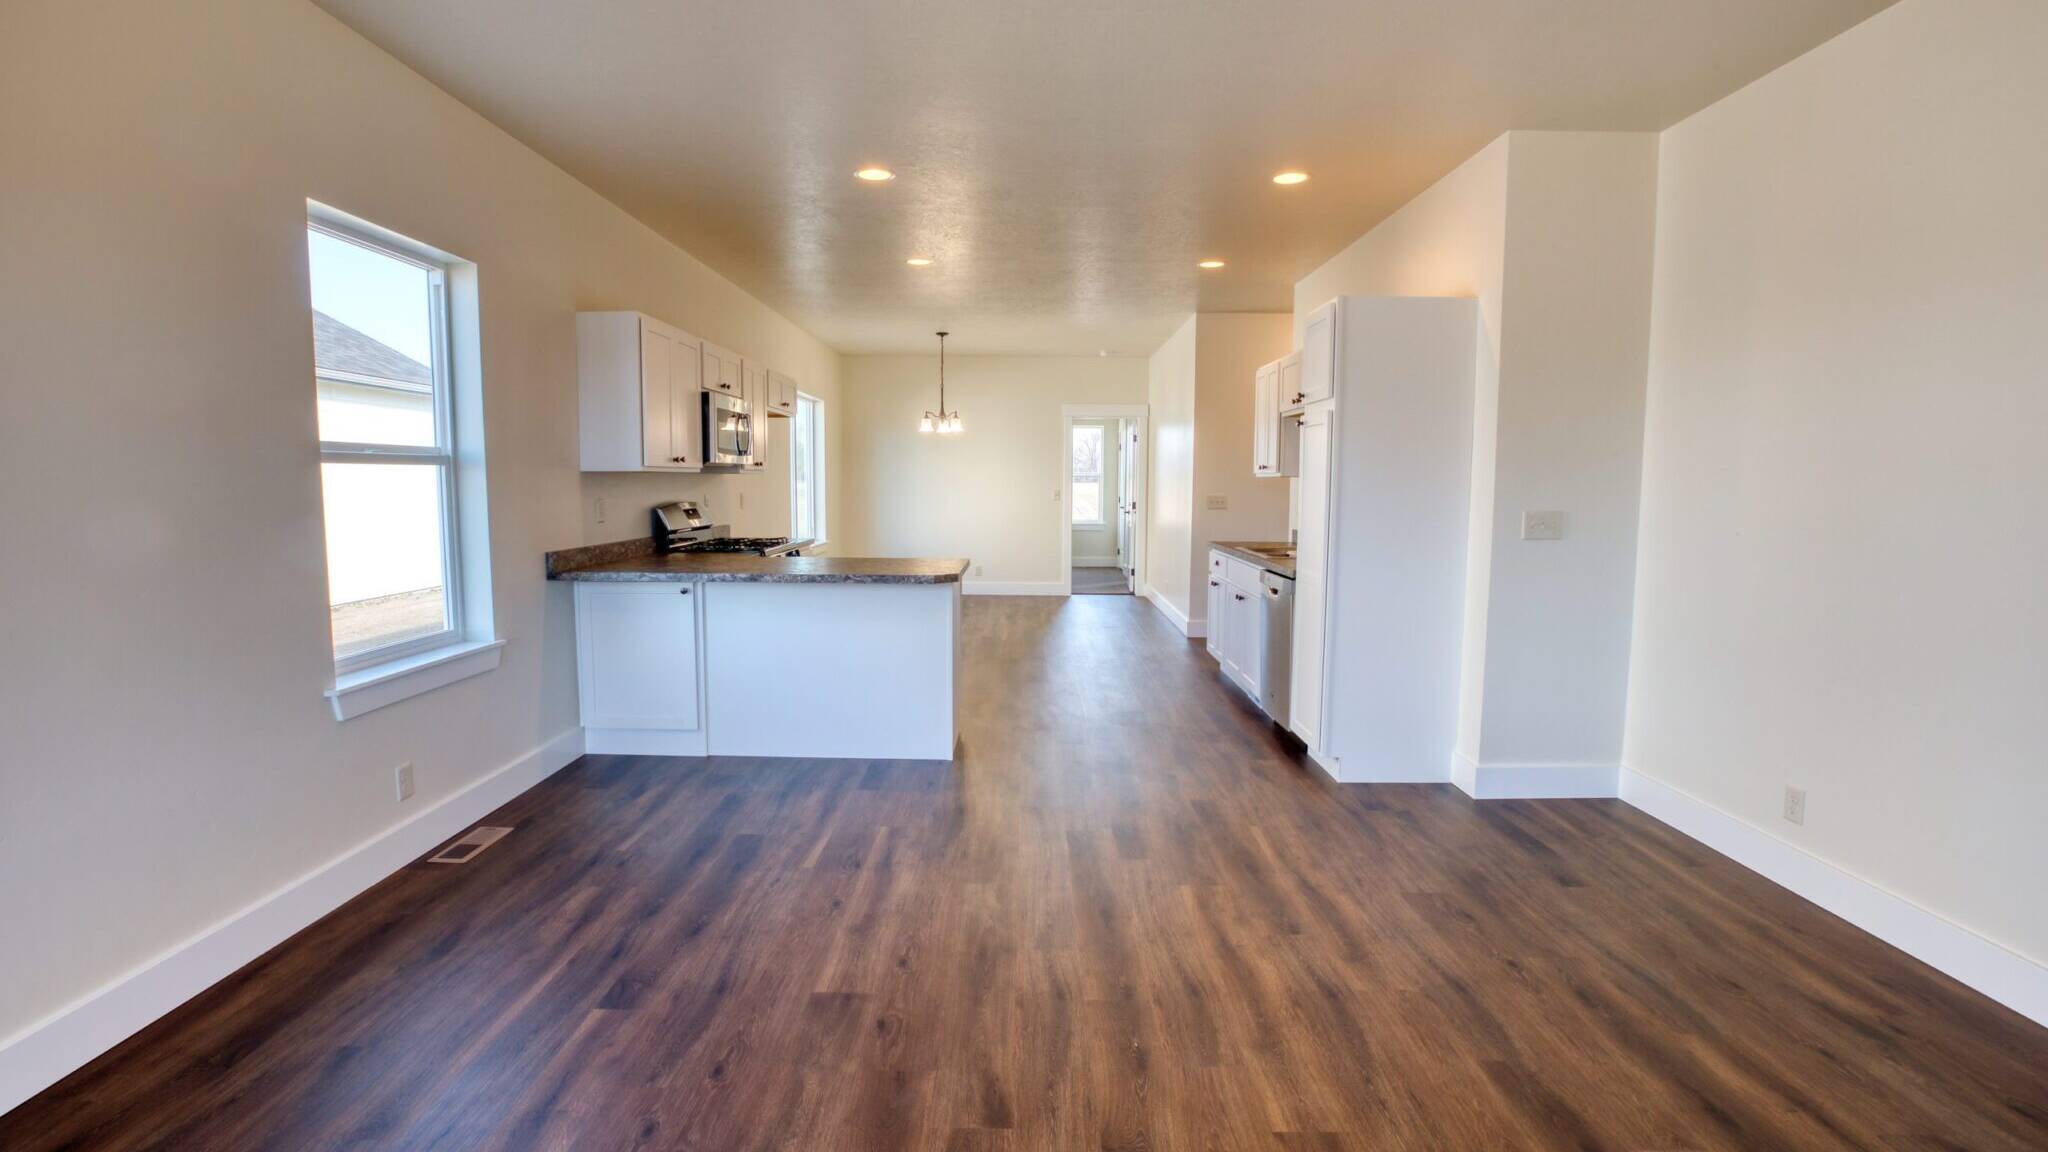 Living Room area in the Mill Creek model home - built by Big Sky Builders in Corvallis, MT